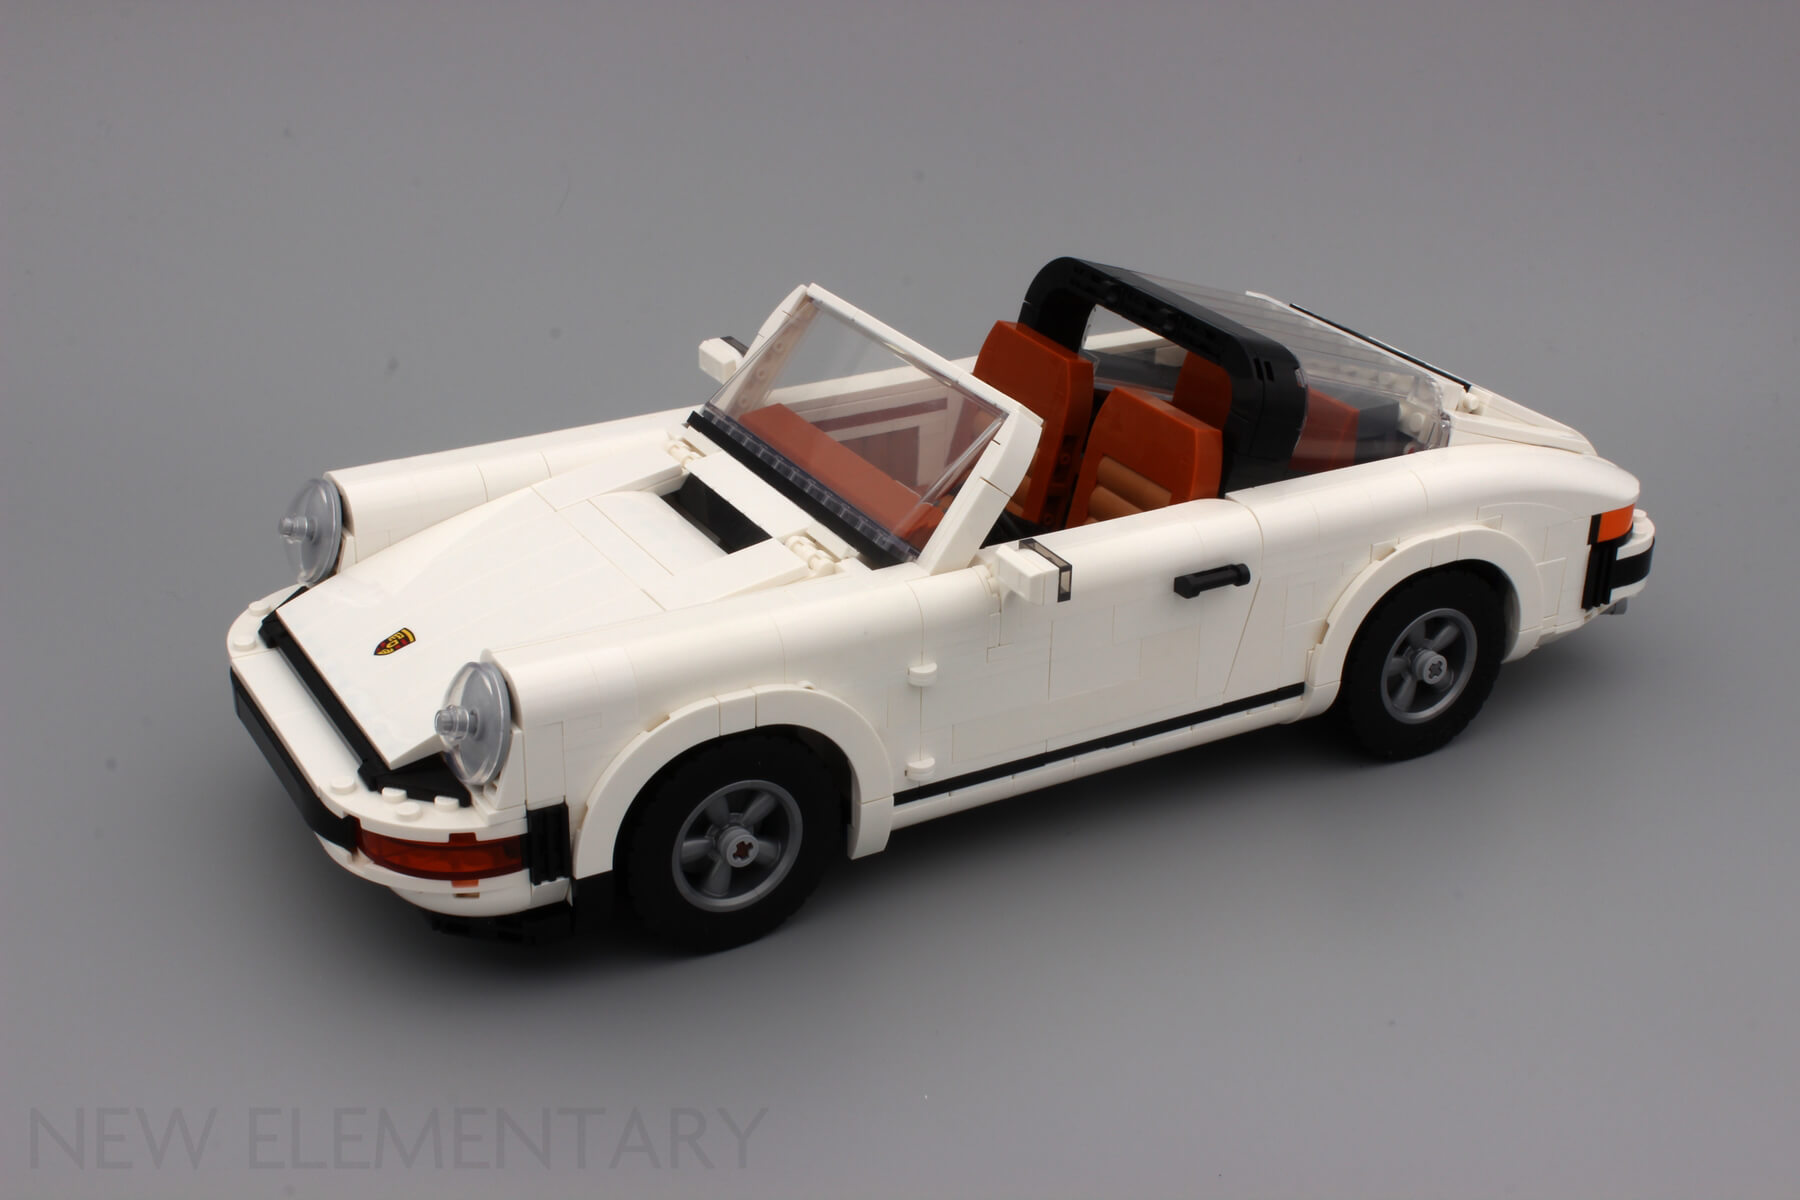 LEGO® Icons review & MOC: 10295 Porsche 911